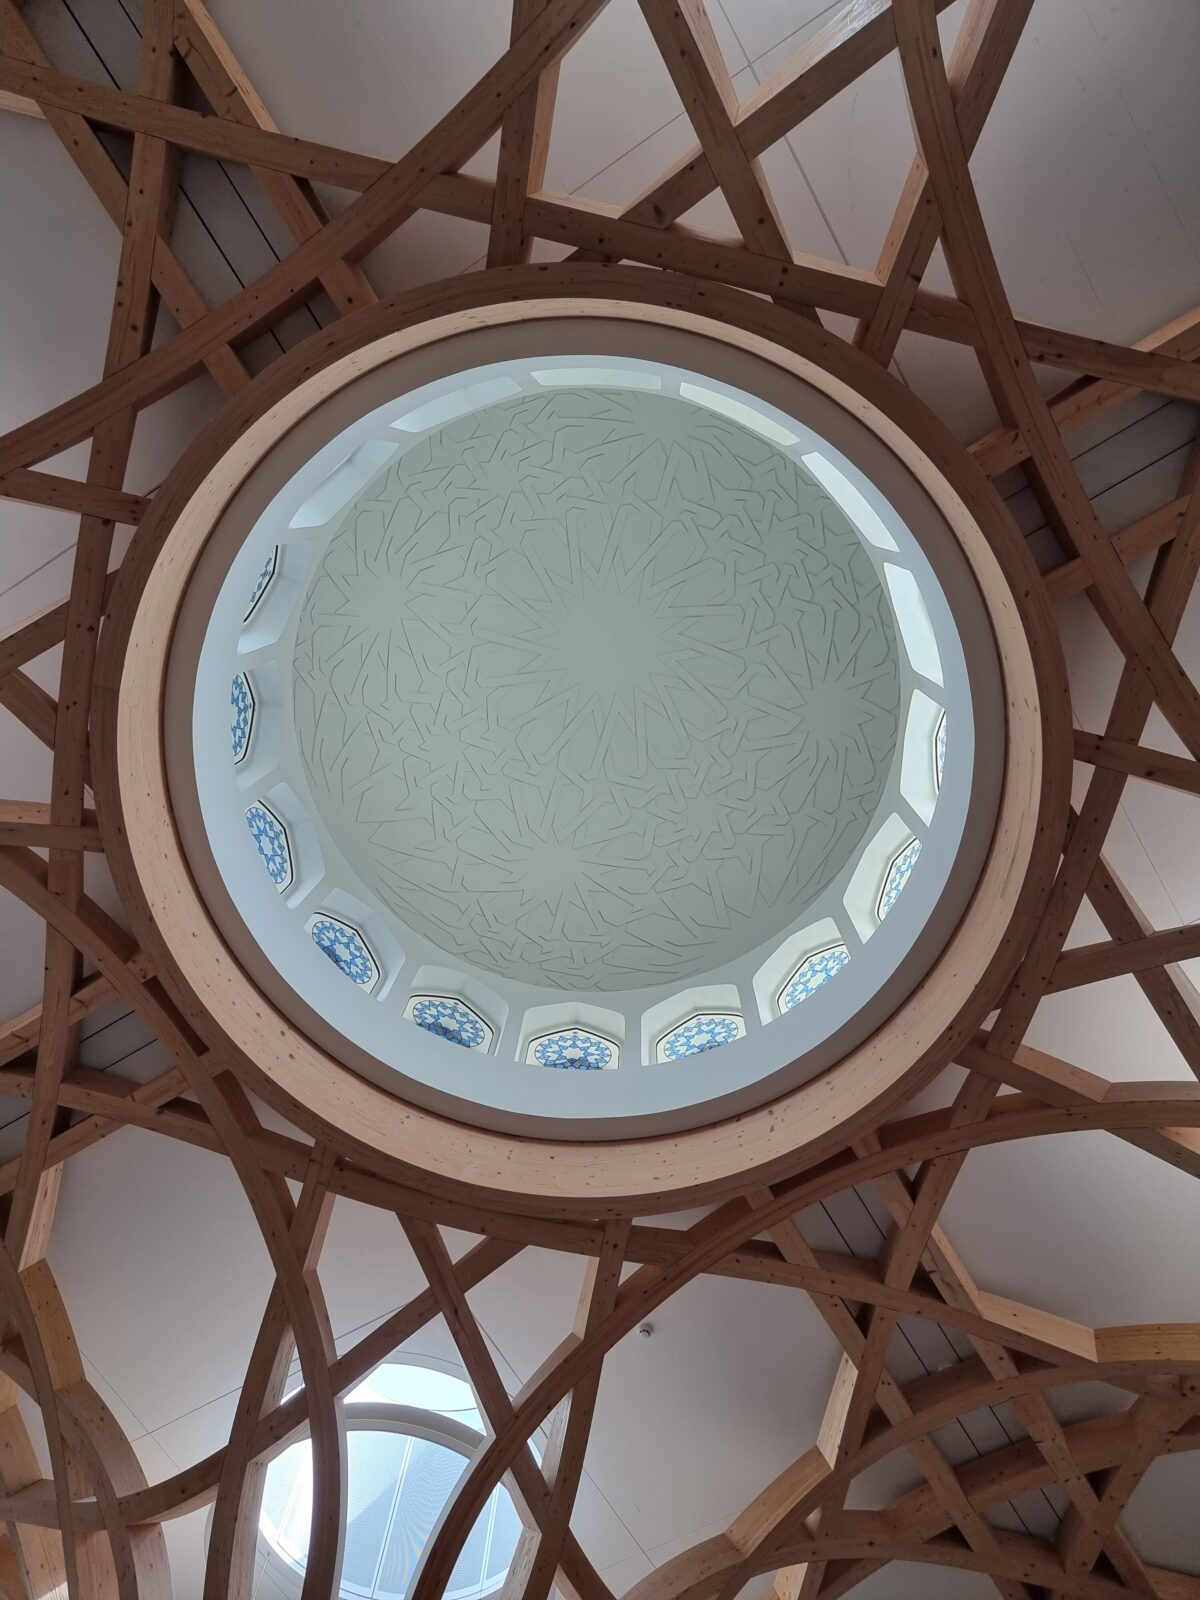 Dome inside Cambridge Central Mosque